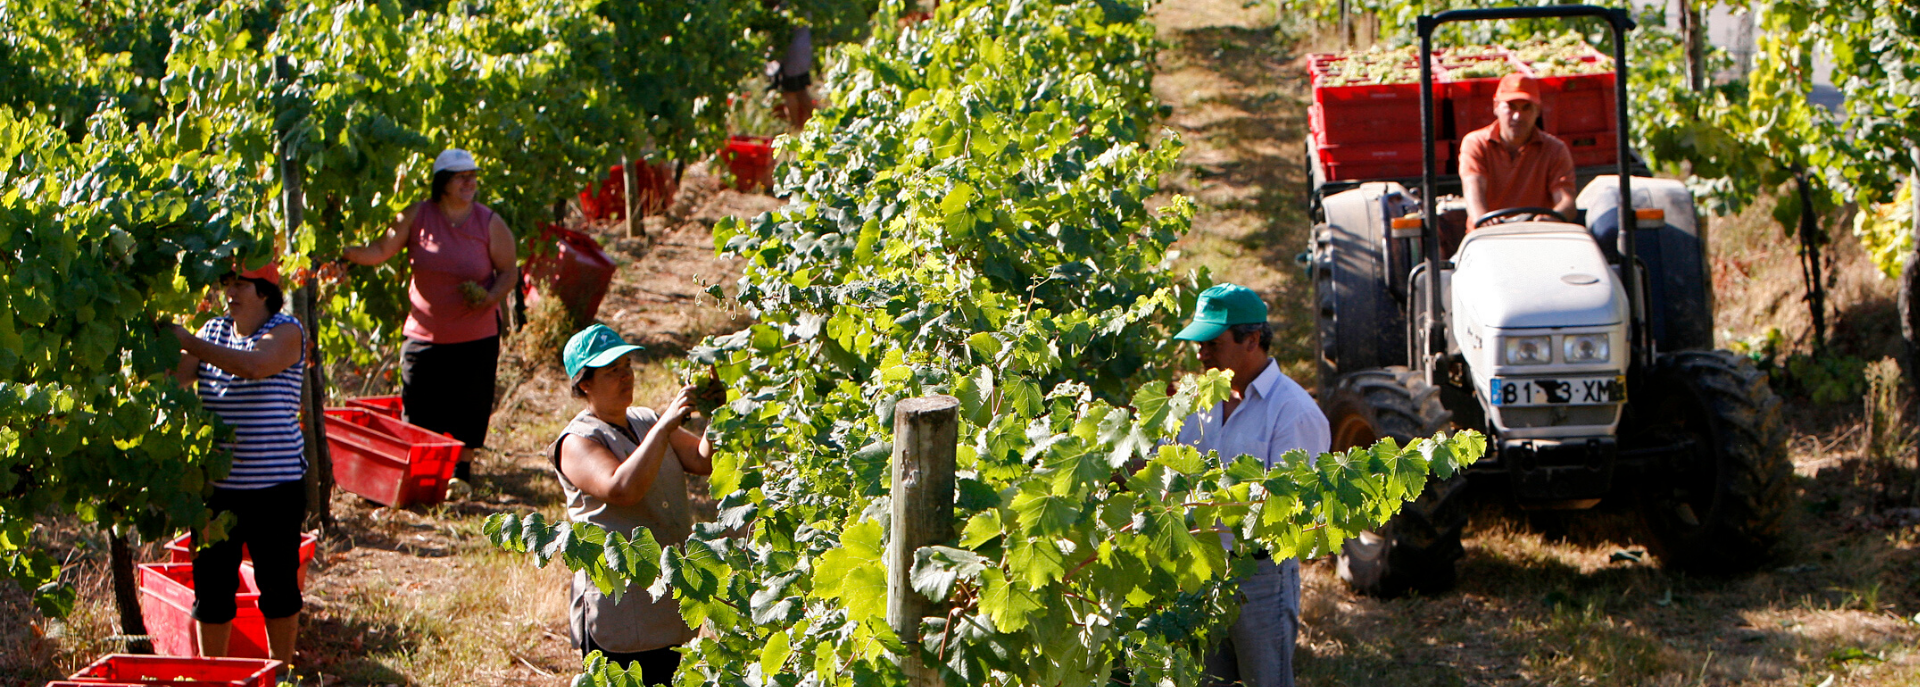 Quinta da Raza vineyard and winery landscape